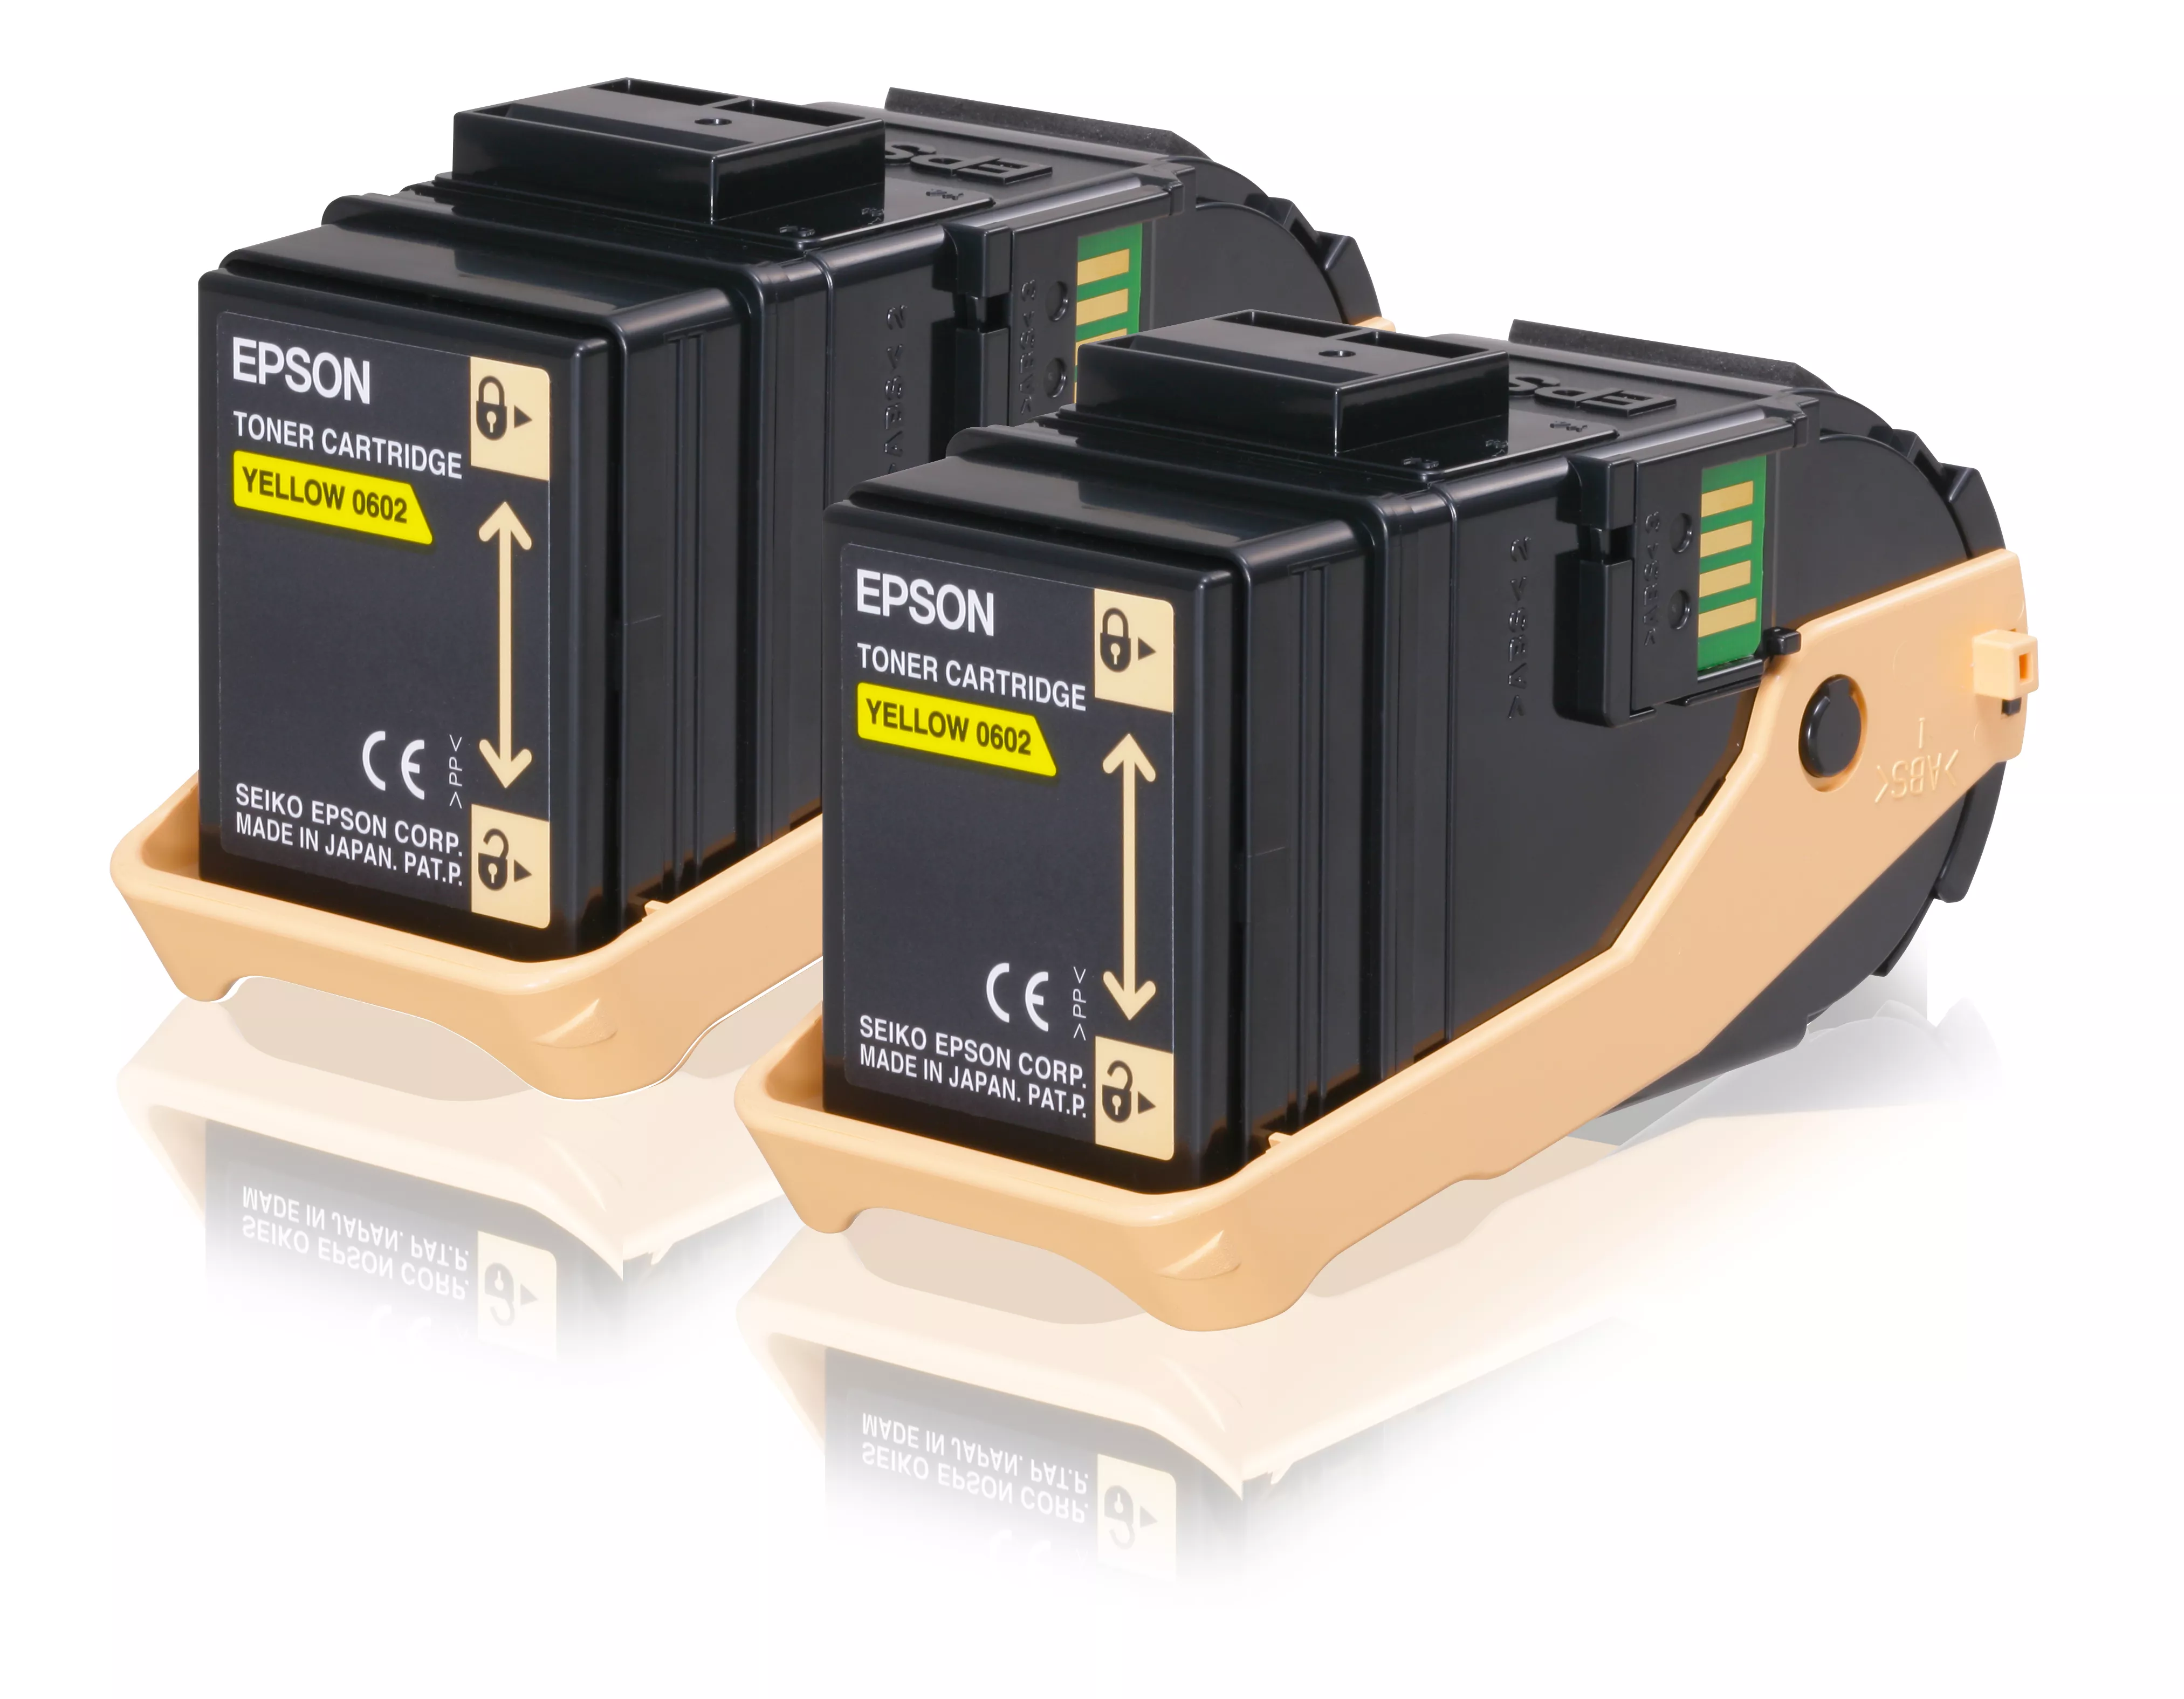 Vente Toner EPSON AL-C9300N cartouche de toner jaune capacité